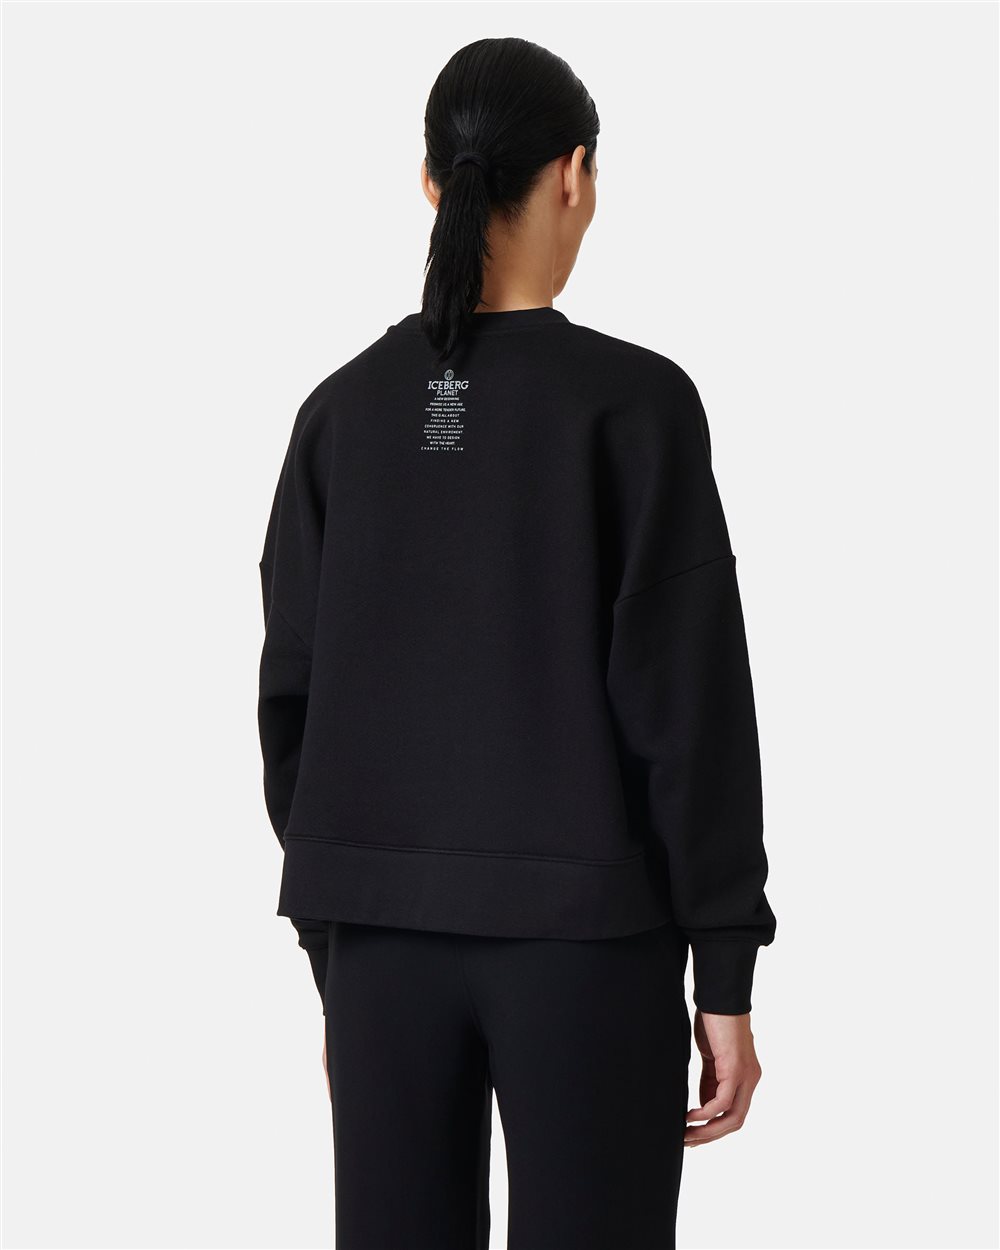 Black sweatshirt with logo - Iceberg - Official Website